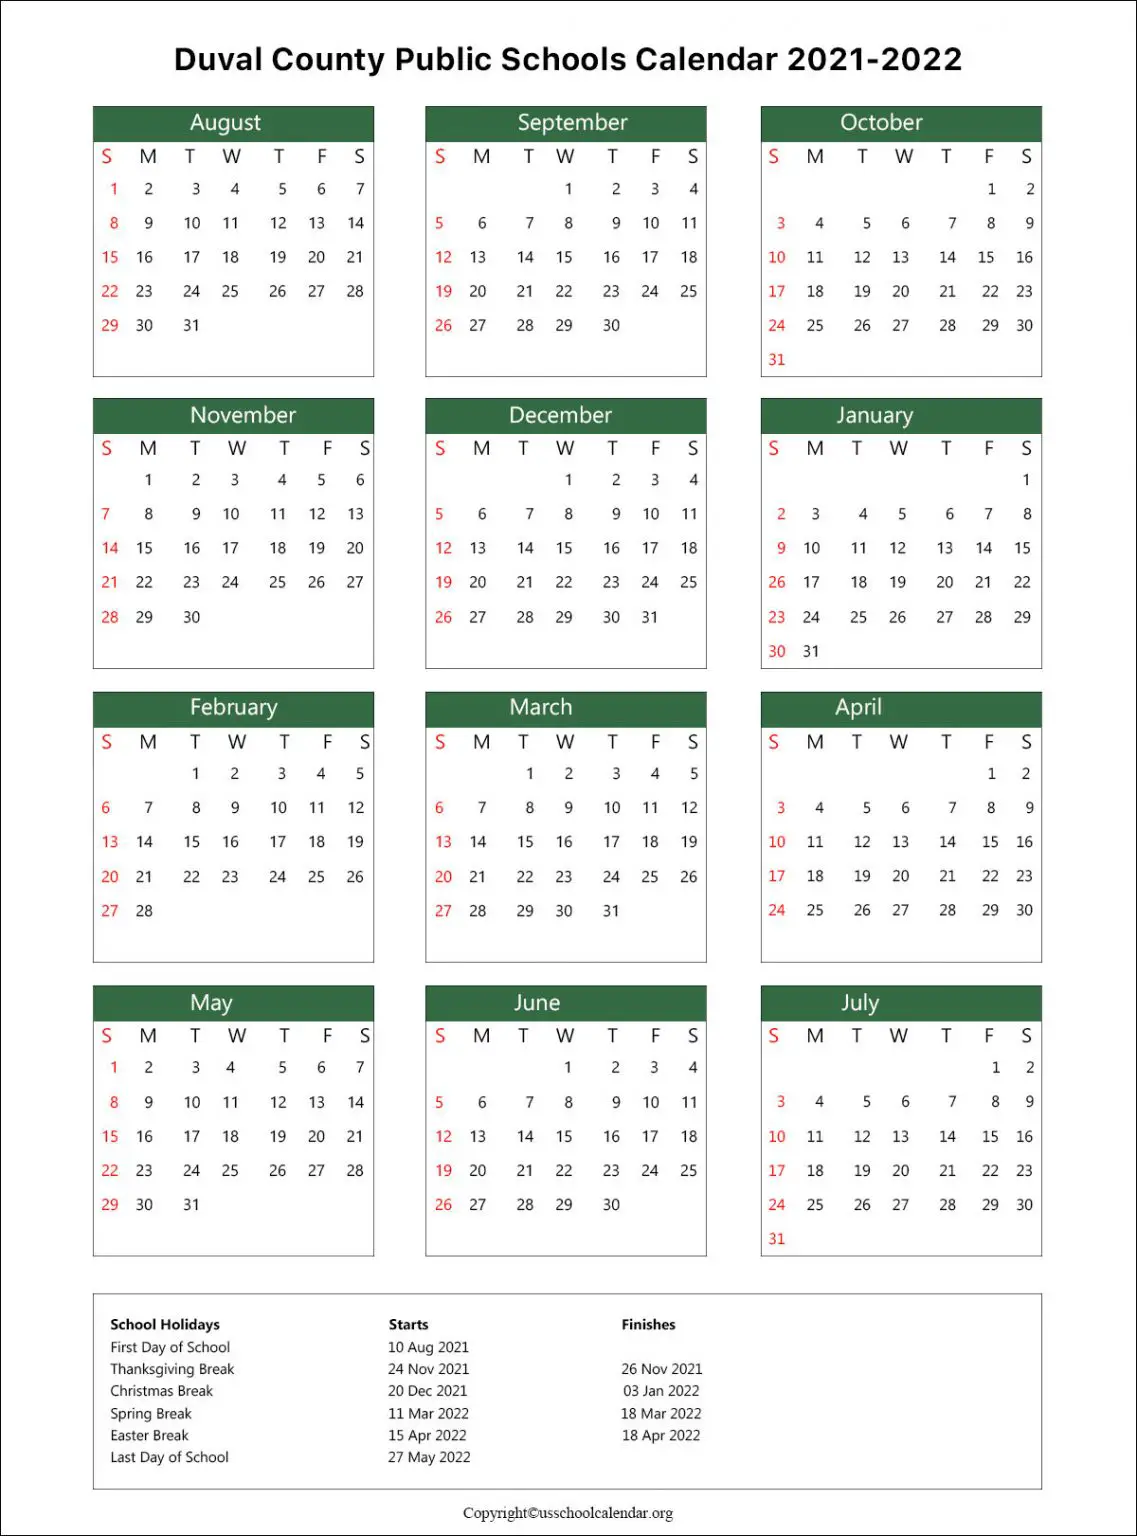 Duval County School Calendar with Holidays 20212022